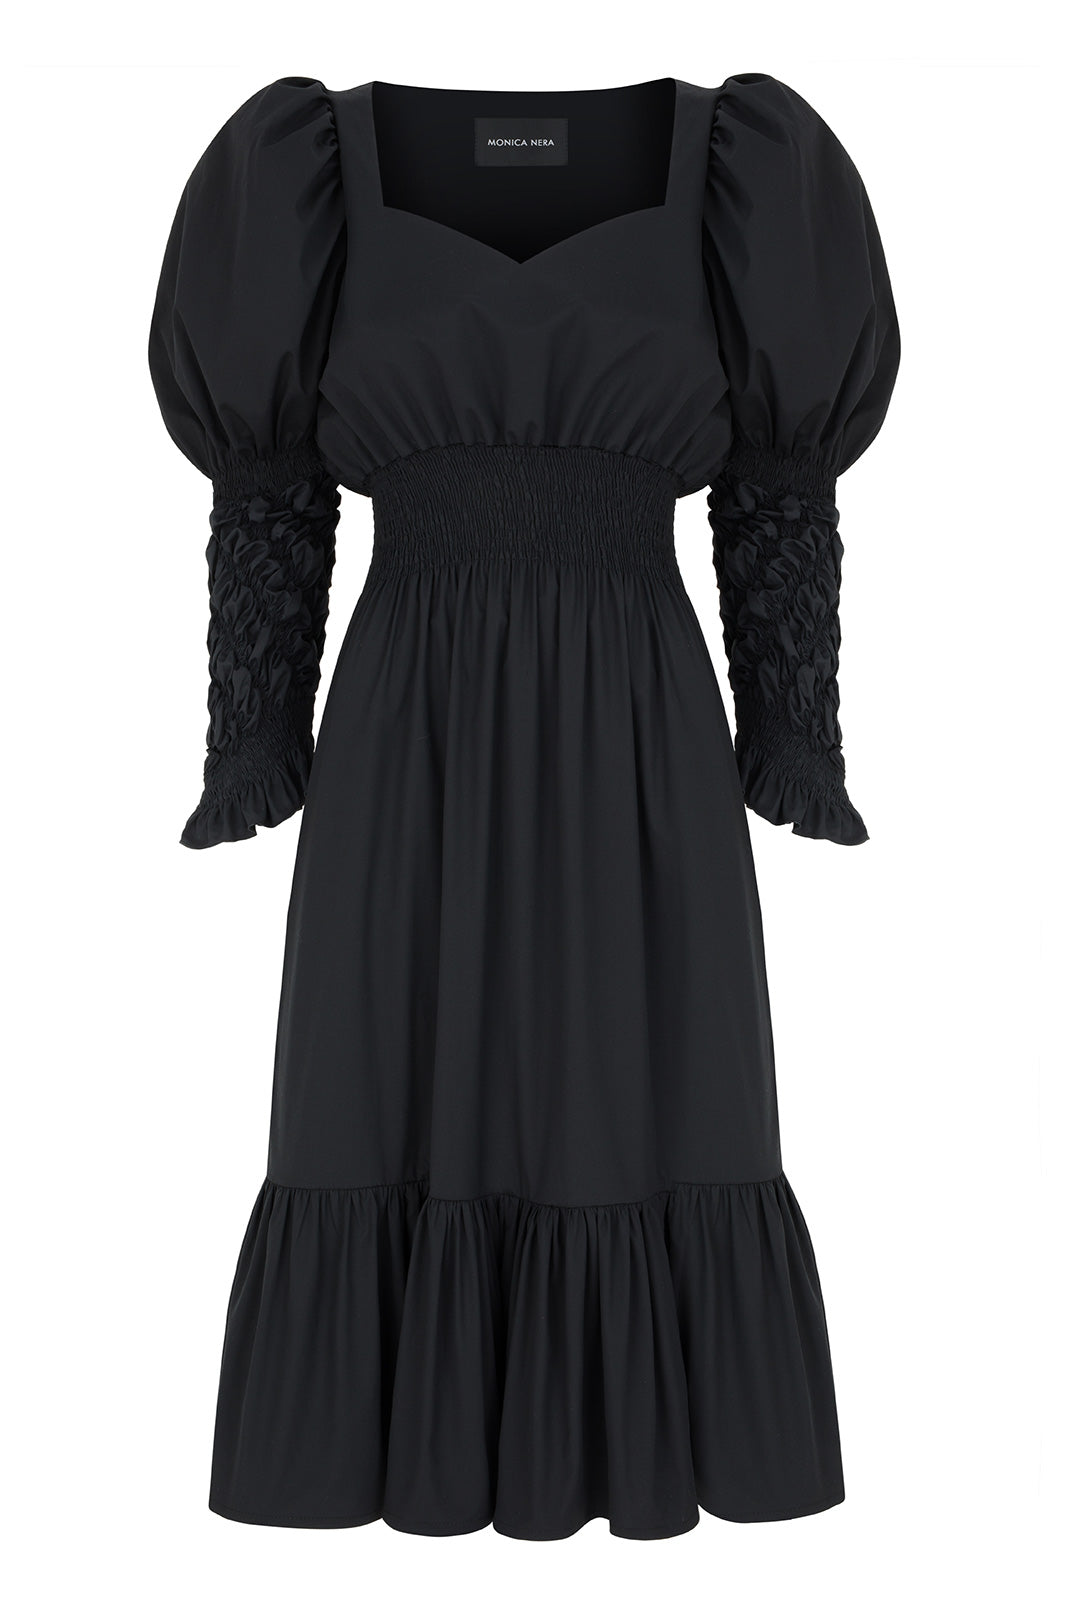 Women’s Blair Dress - Black Medium Monica Nera